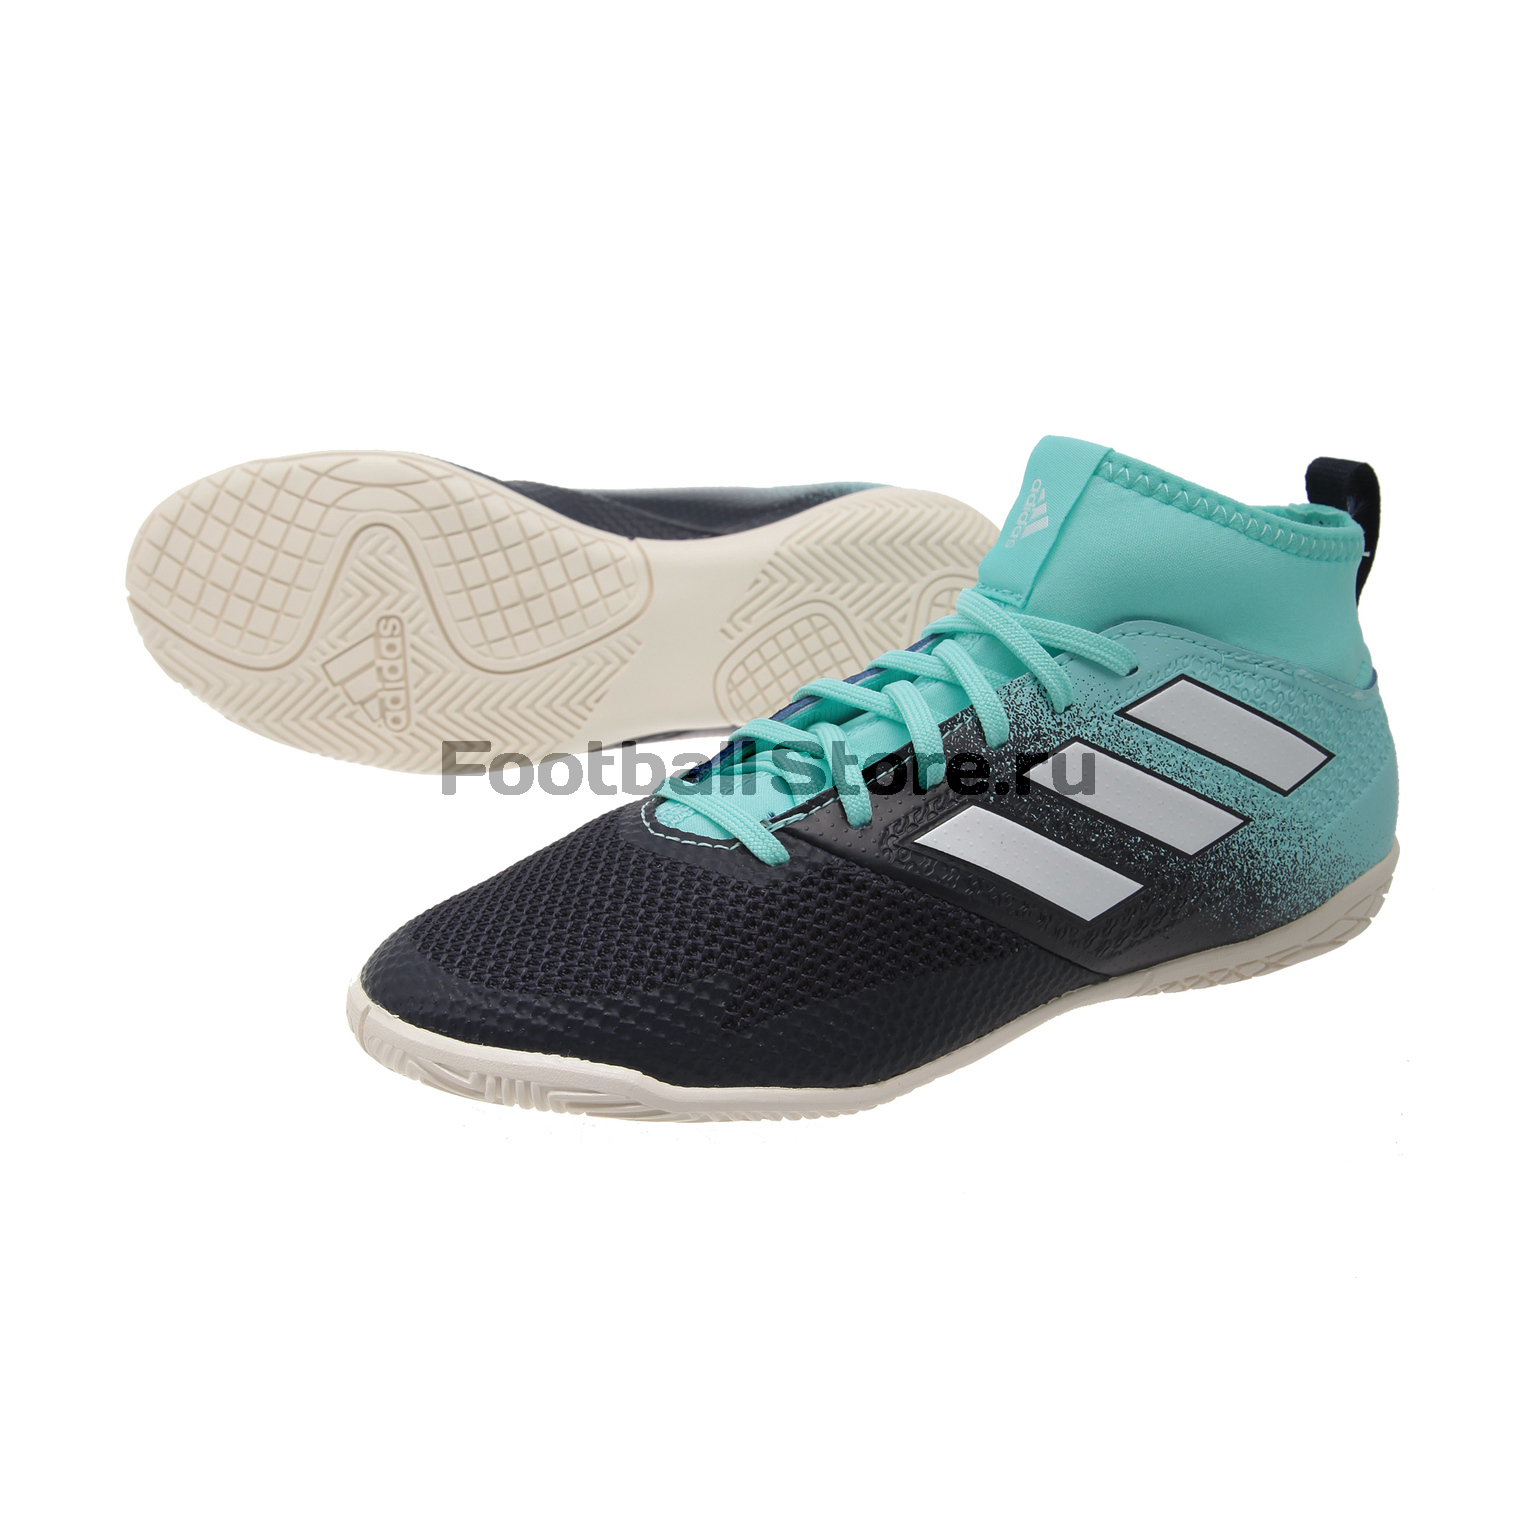 Футзалки детские Adidas Ace Tango 17.3 IN CG3713